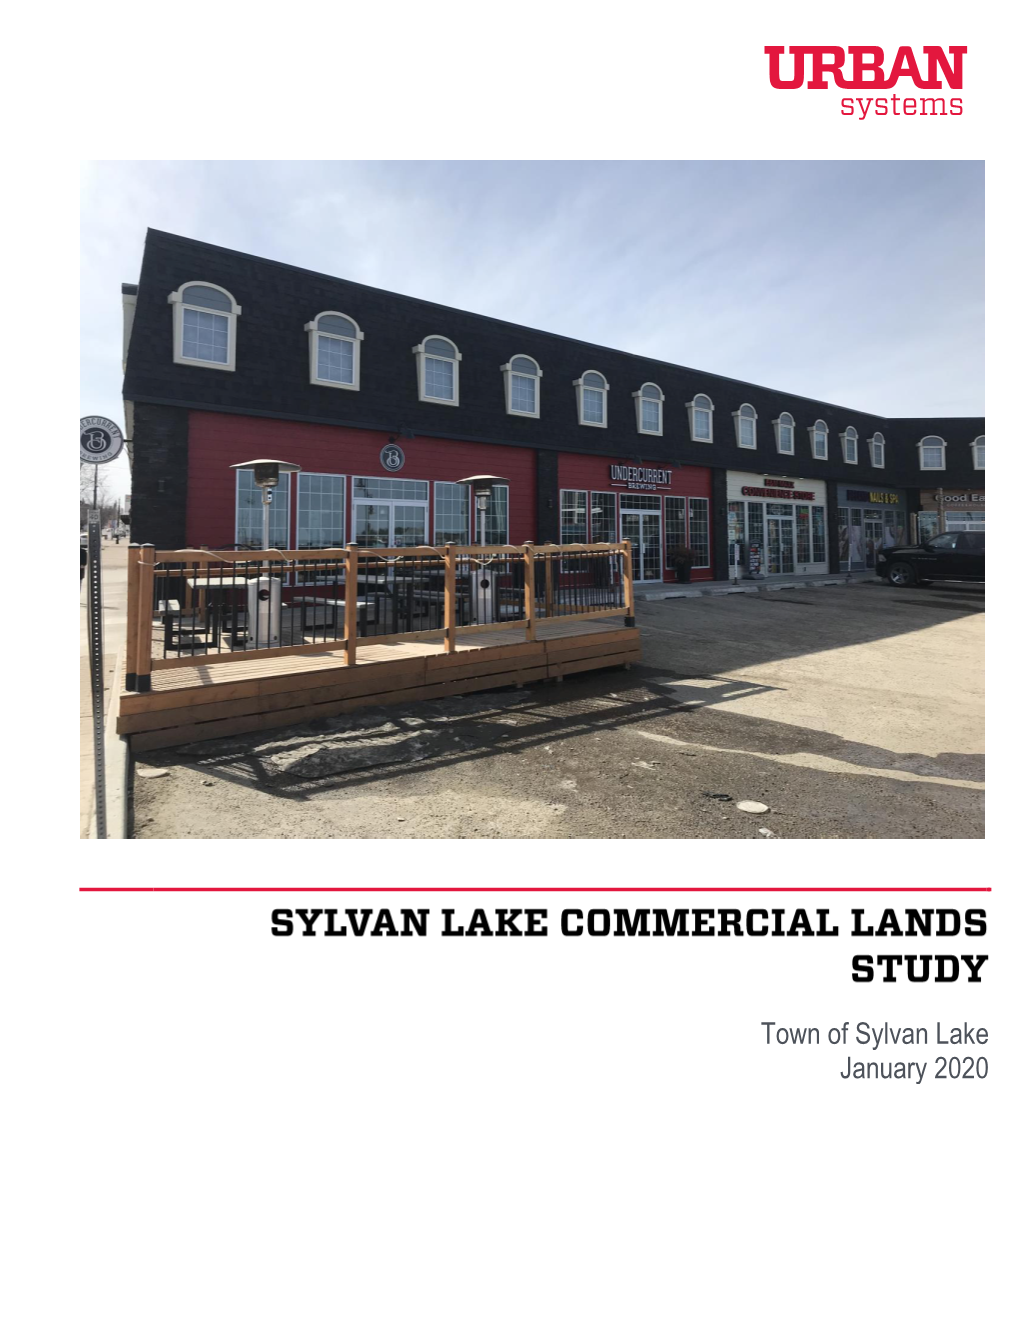 Sylvan Lake Commercial Lands Study